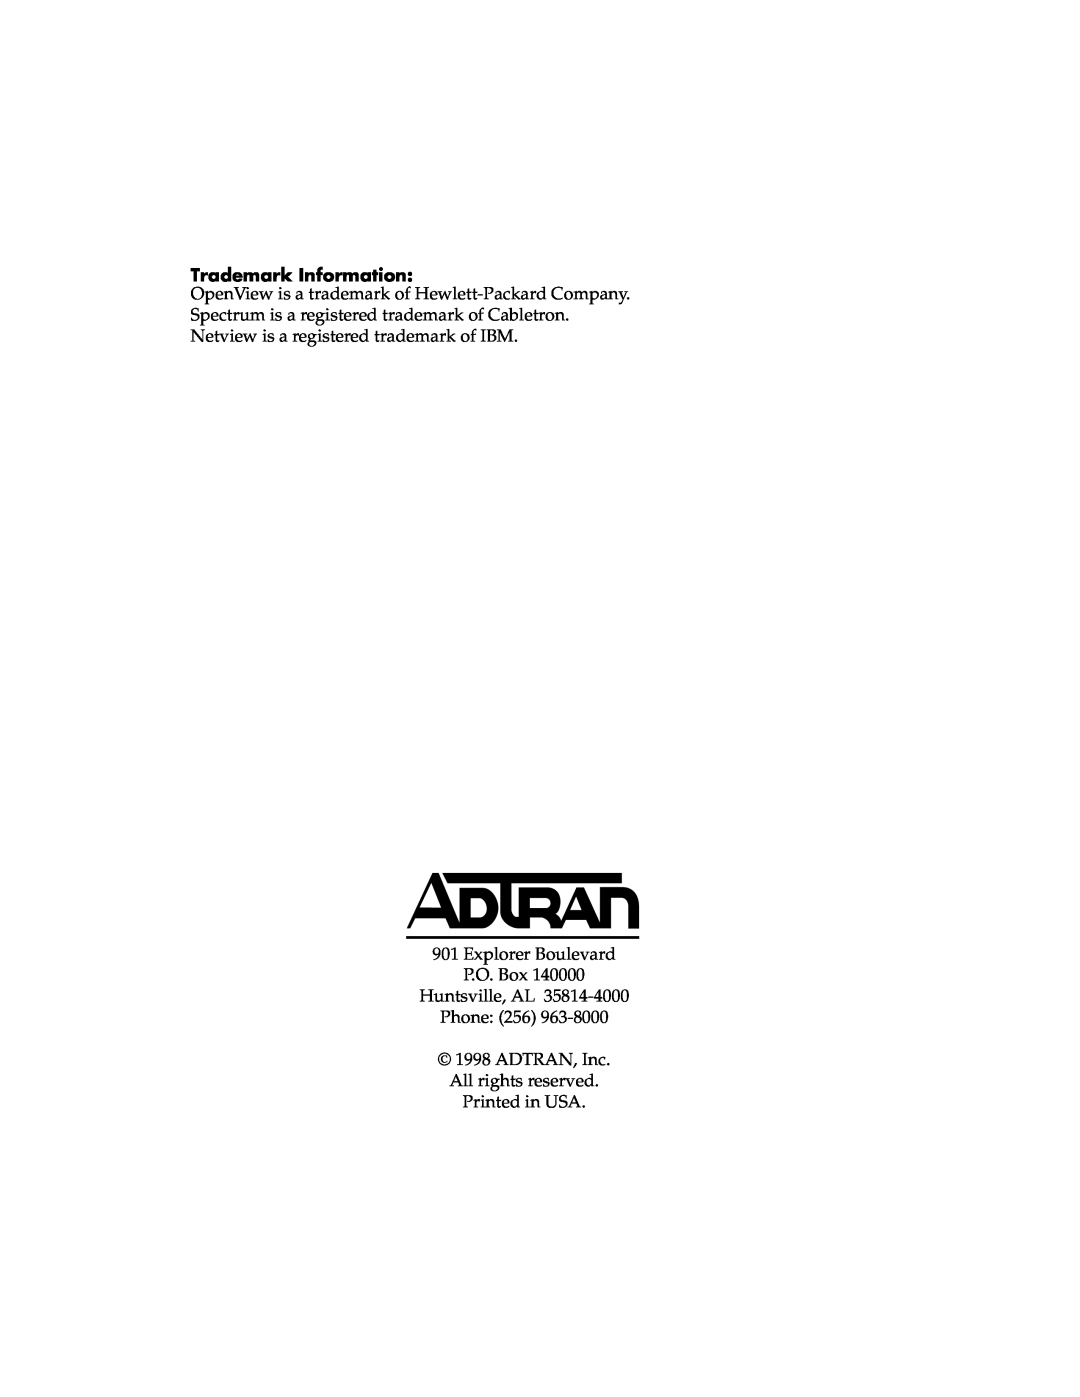 ADTRAN T3SU 300 user manual Trademark Information, Explorer Boulevard P.O. Box Huntsville, AL Phone 256 